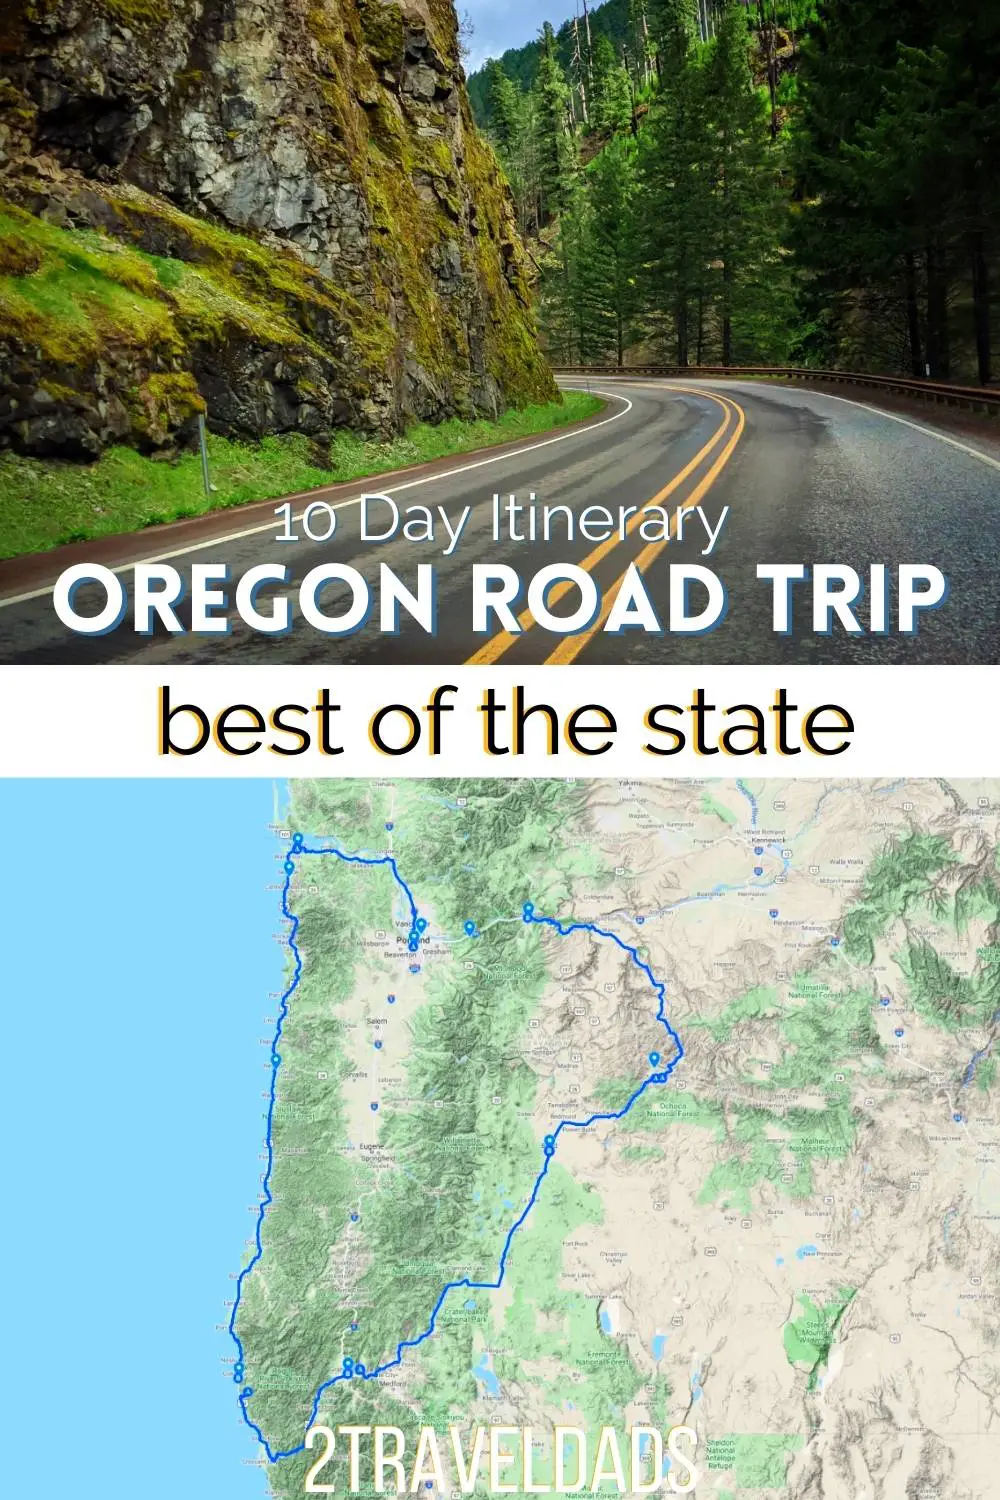 Utah Valley heads to Oregon for tough two-game road trip - Utah